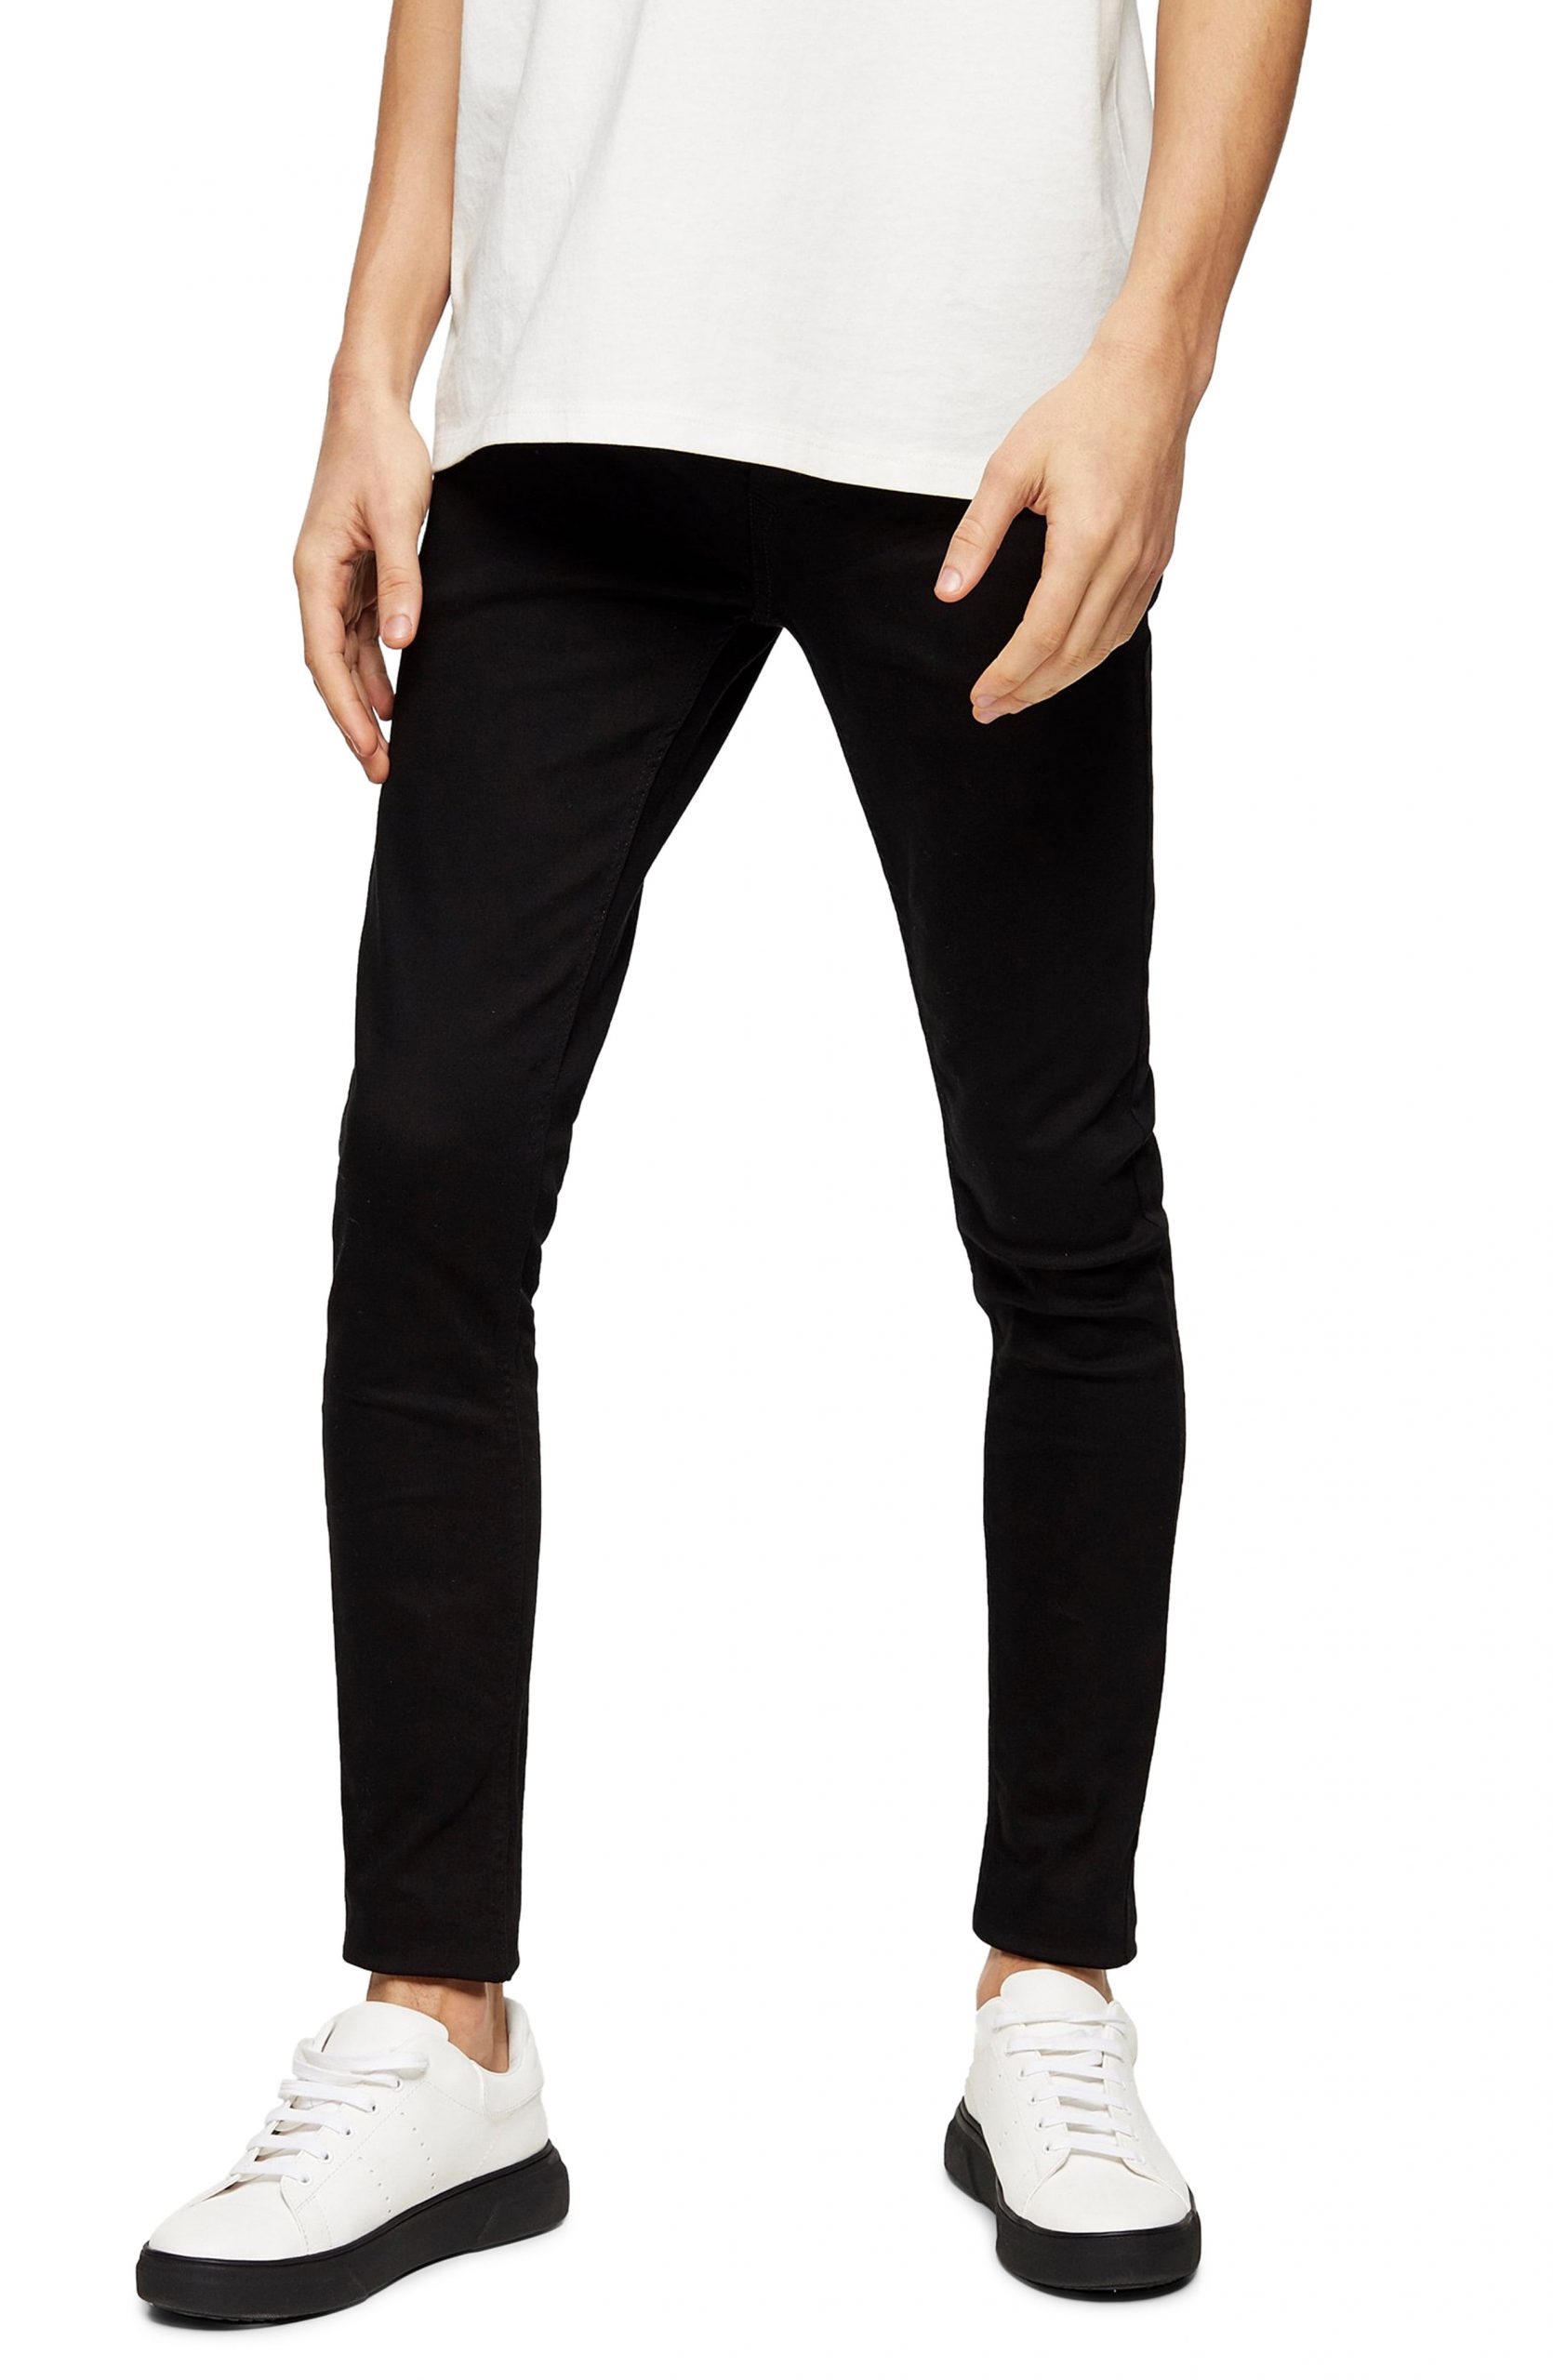 fade resistant black pants